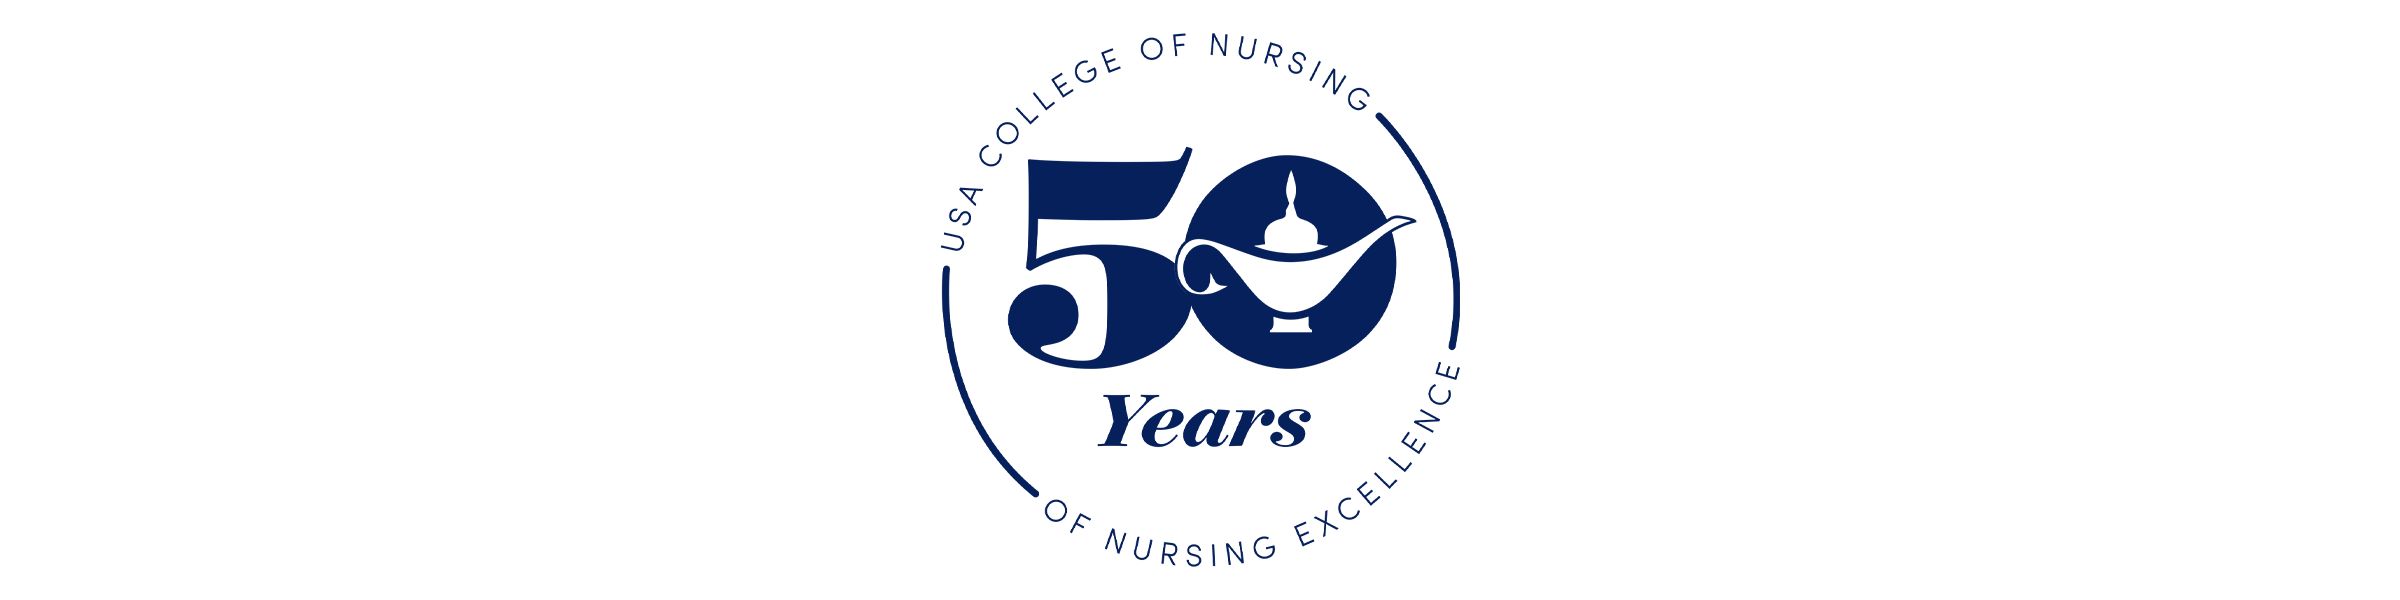 USA College of Nursing - 50th Anniversary